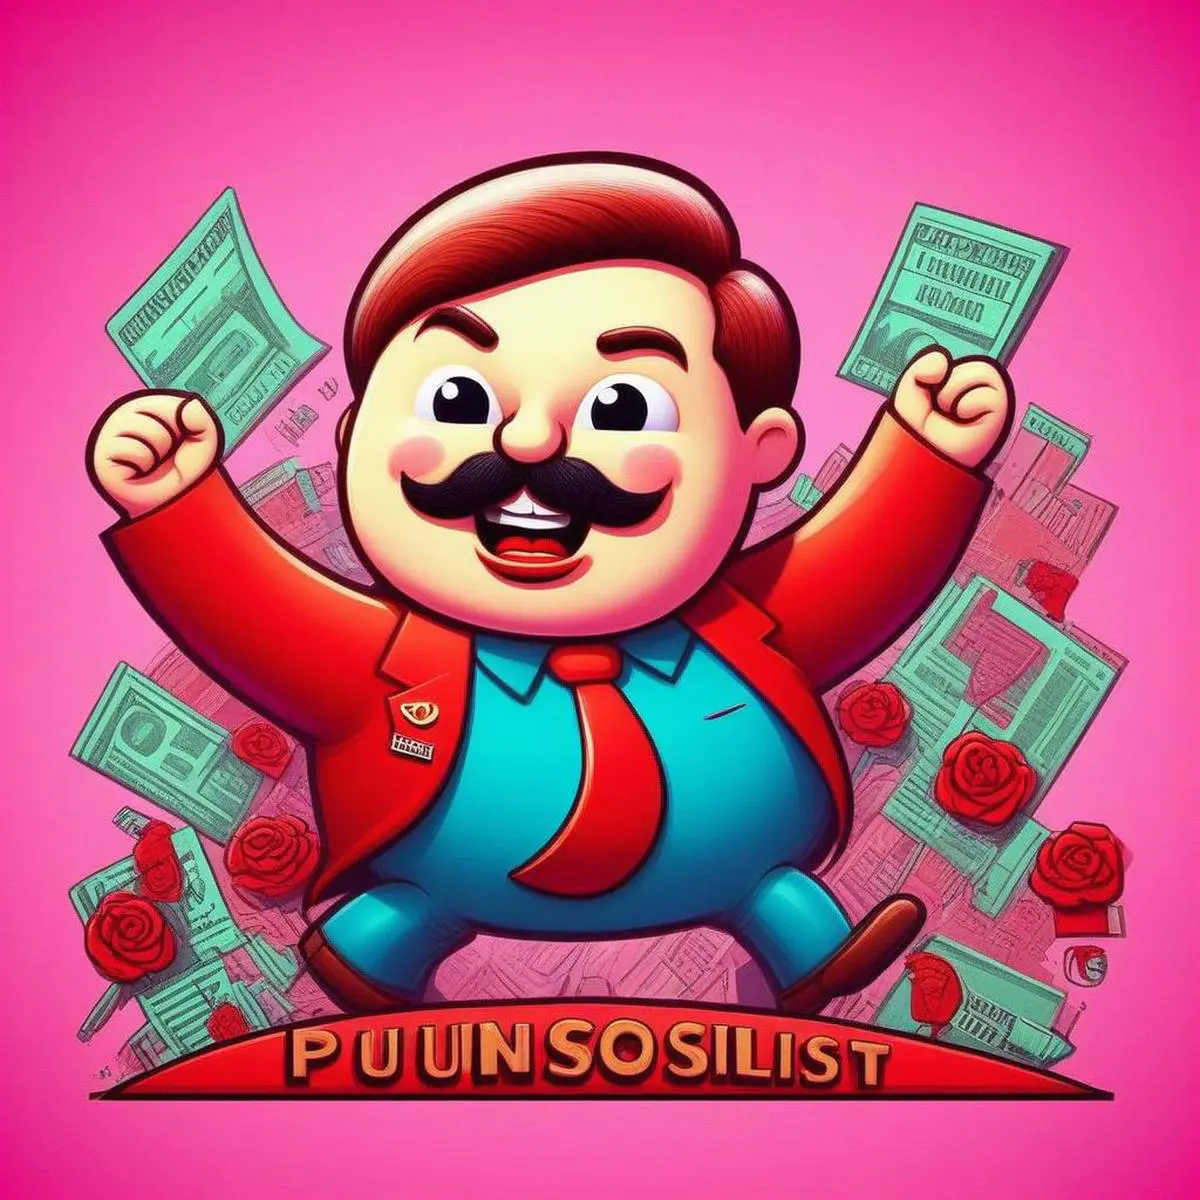 Socialist puns